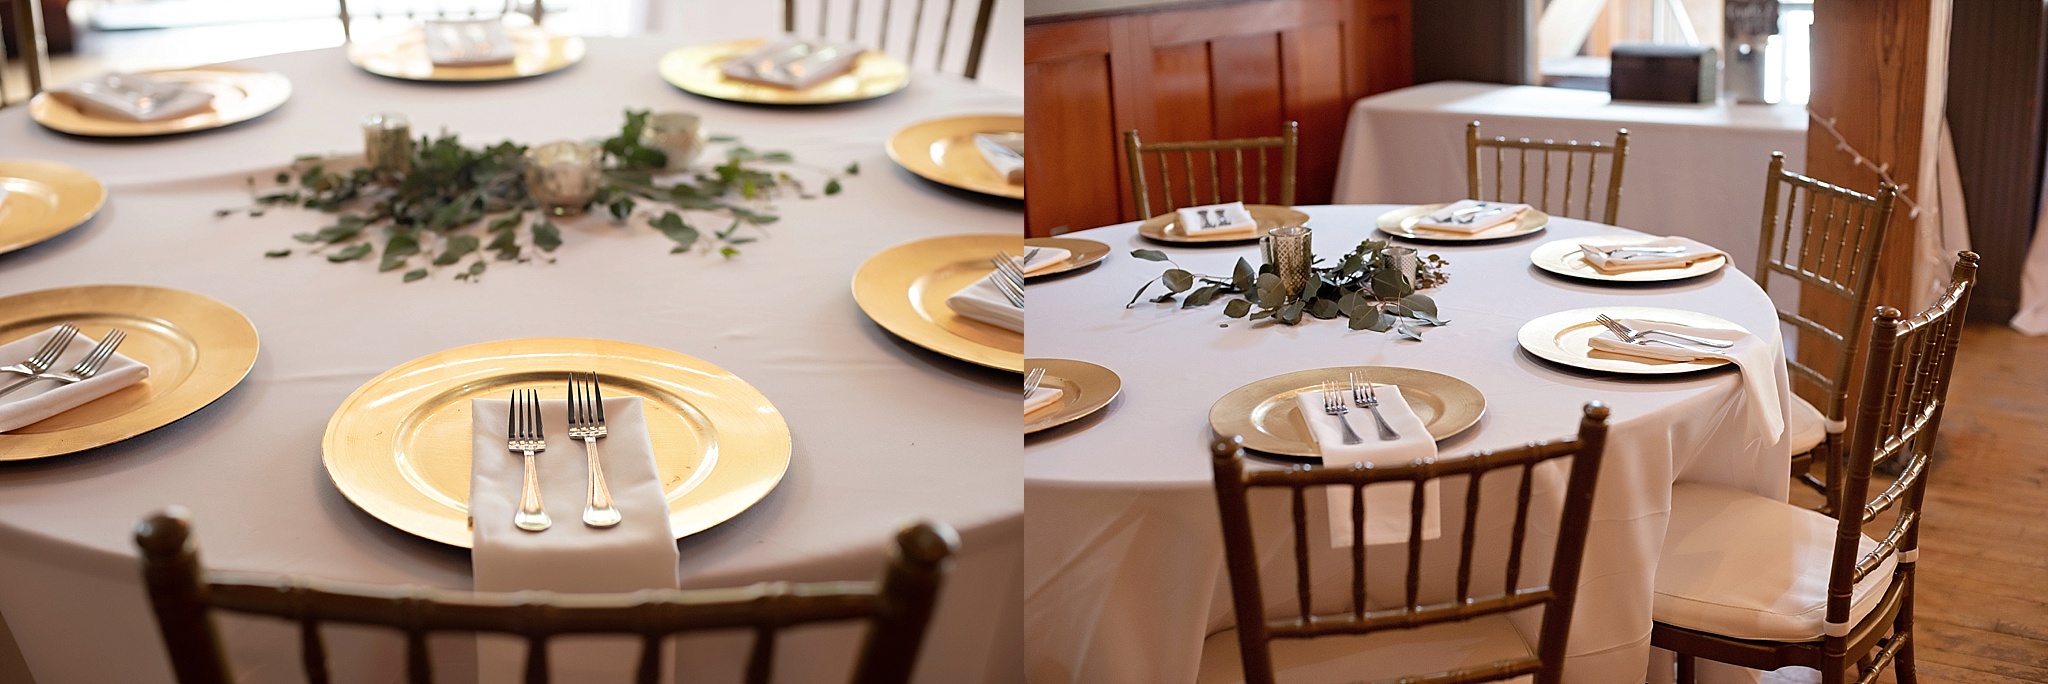 gold and white eucalyptus leaves wedding reception decor icon events sioux falls south dakota downtown